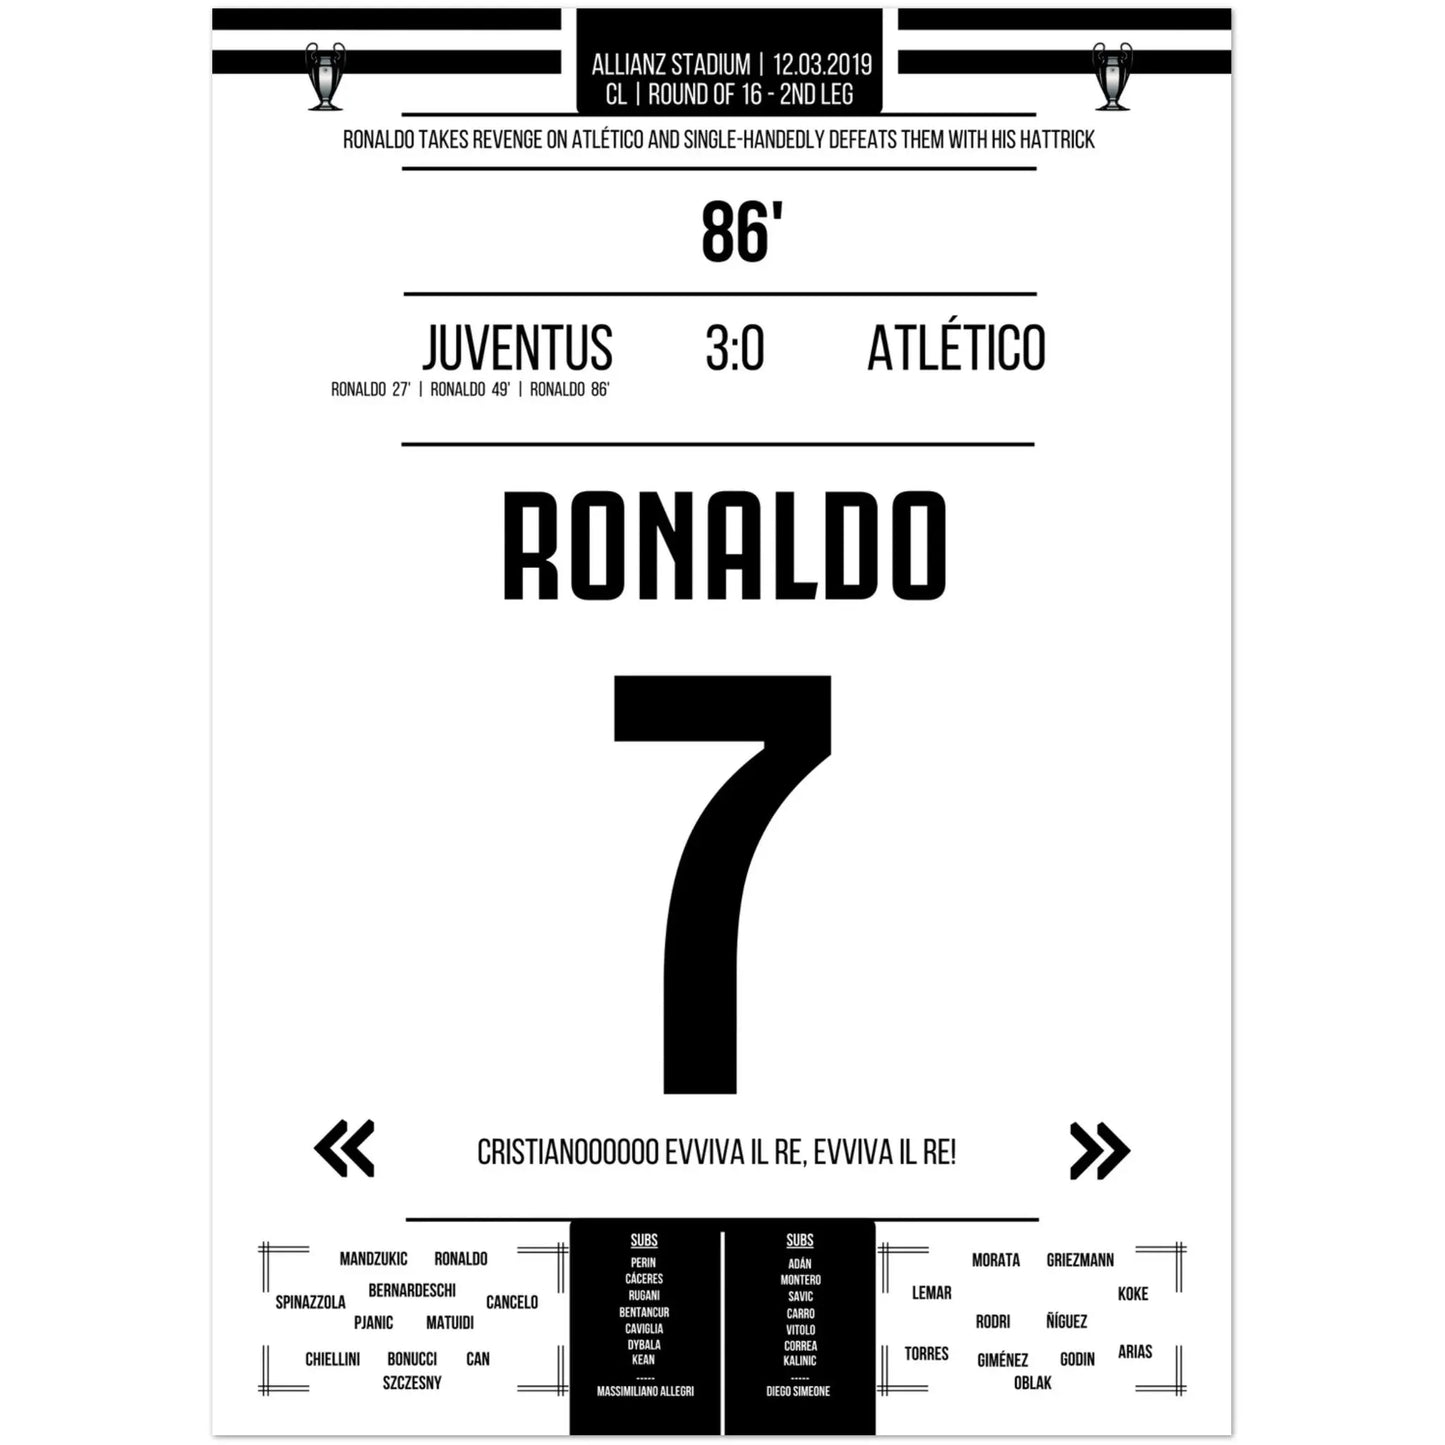 Ronaldo's revenge against Atlético in the 2019 Champions League round of 16 second leg